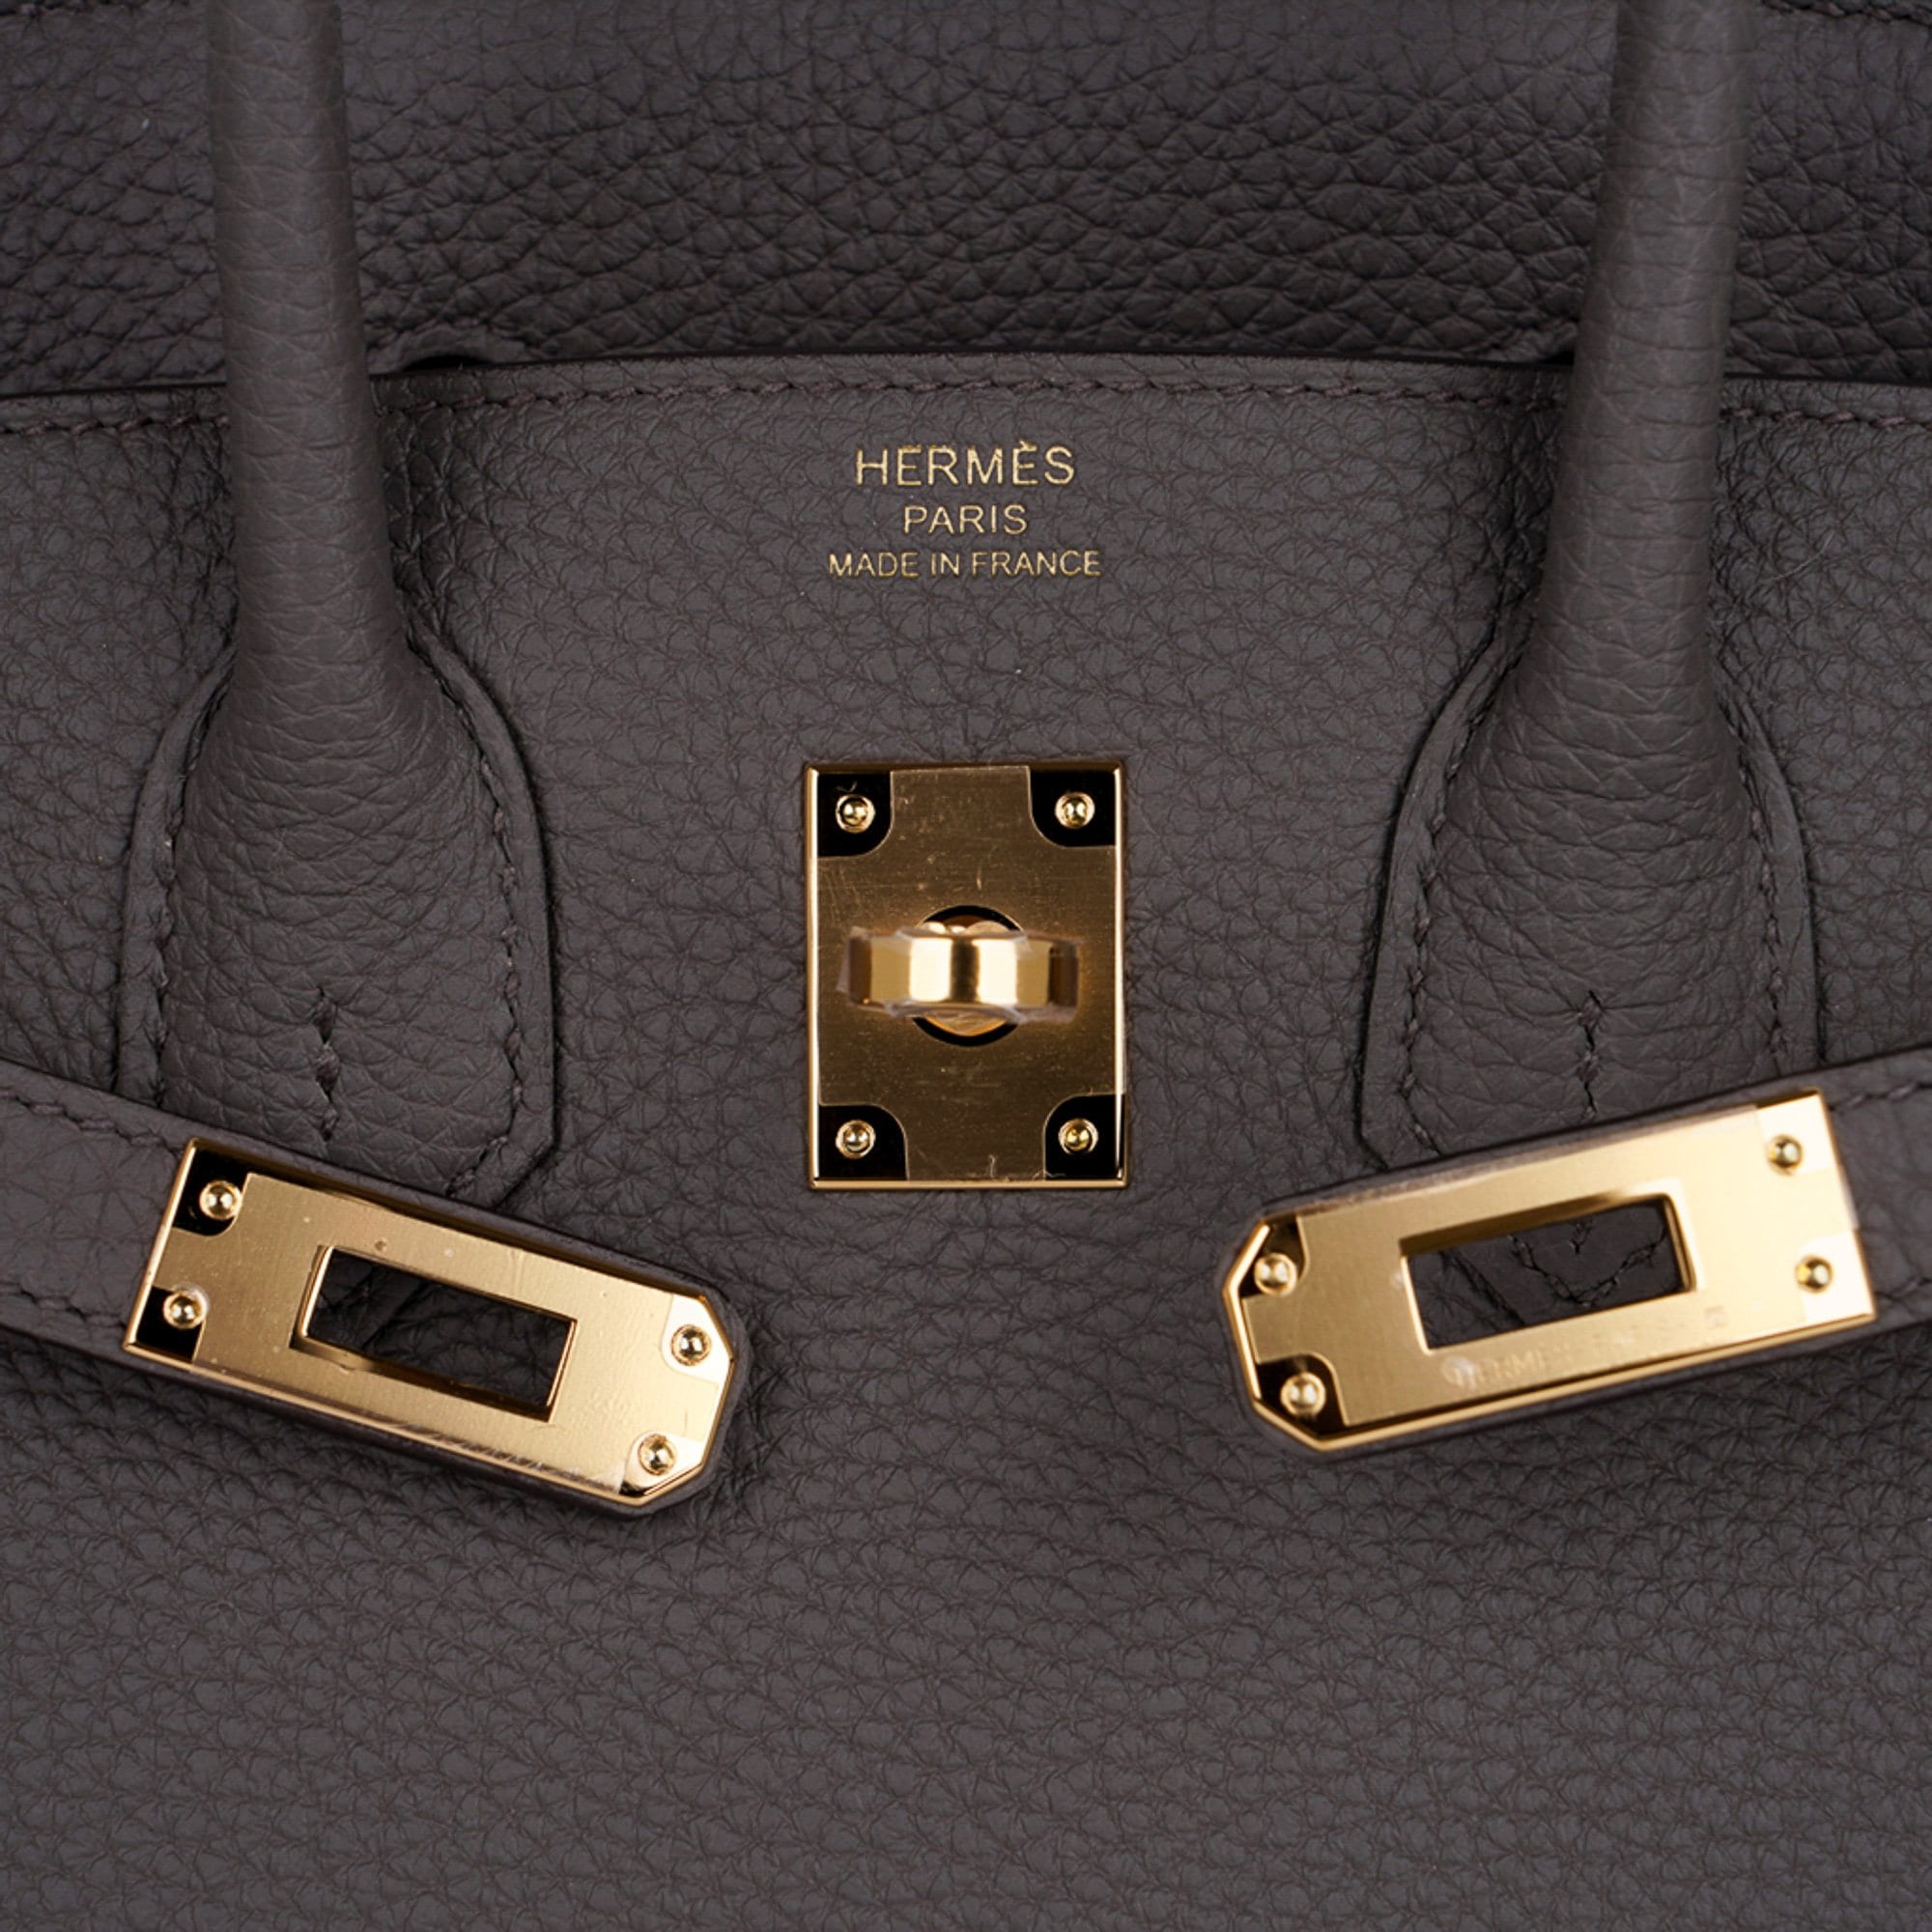 Hermès Birkin 25 in Etain  Hermes birkin 25, Birkin 25, Hermes birkin